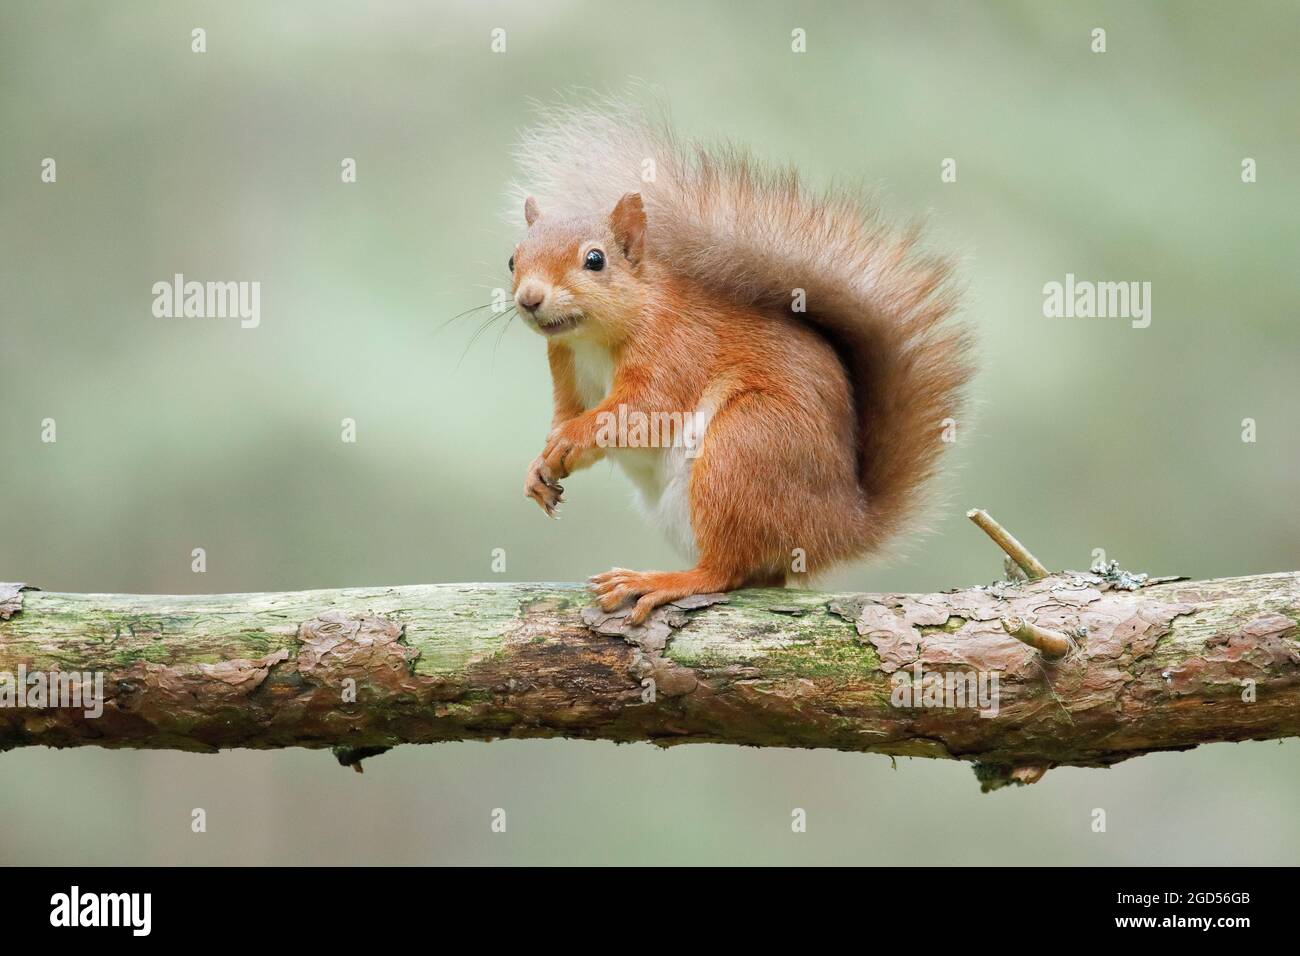 zoology, mammal (mammalia), squirrel (Sciurus vulgaris), NO-EXCLUSIVE-USE FOR FOLDING-CARD-GREETING-CARD-POSTCARD-USE Stock Photo